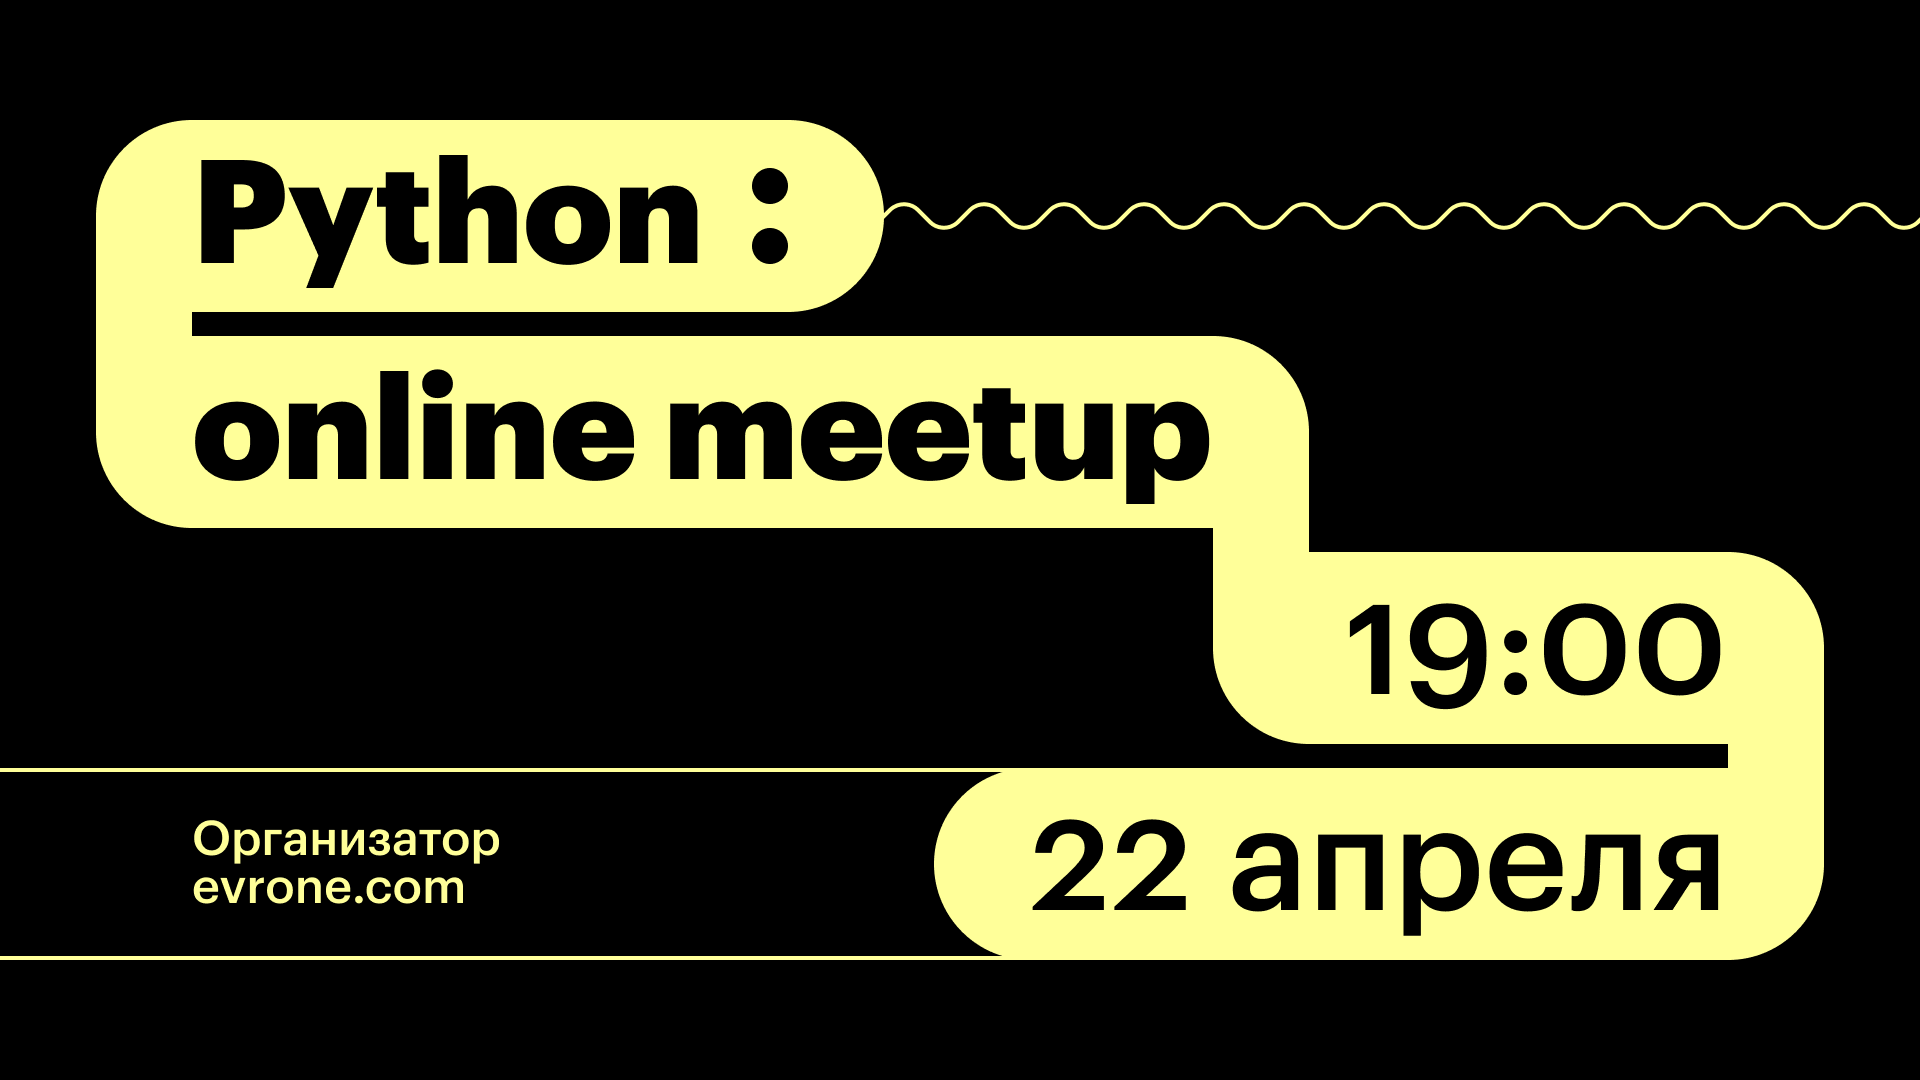 Онлайн Python meetup от Evrone. В гостях — S7 techlab и Zipsale.